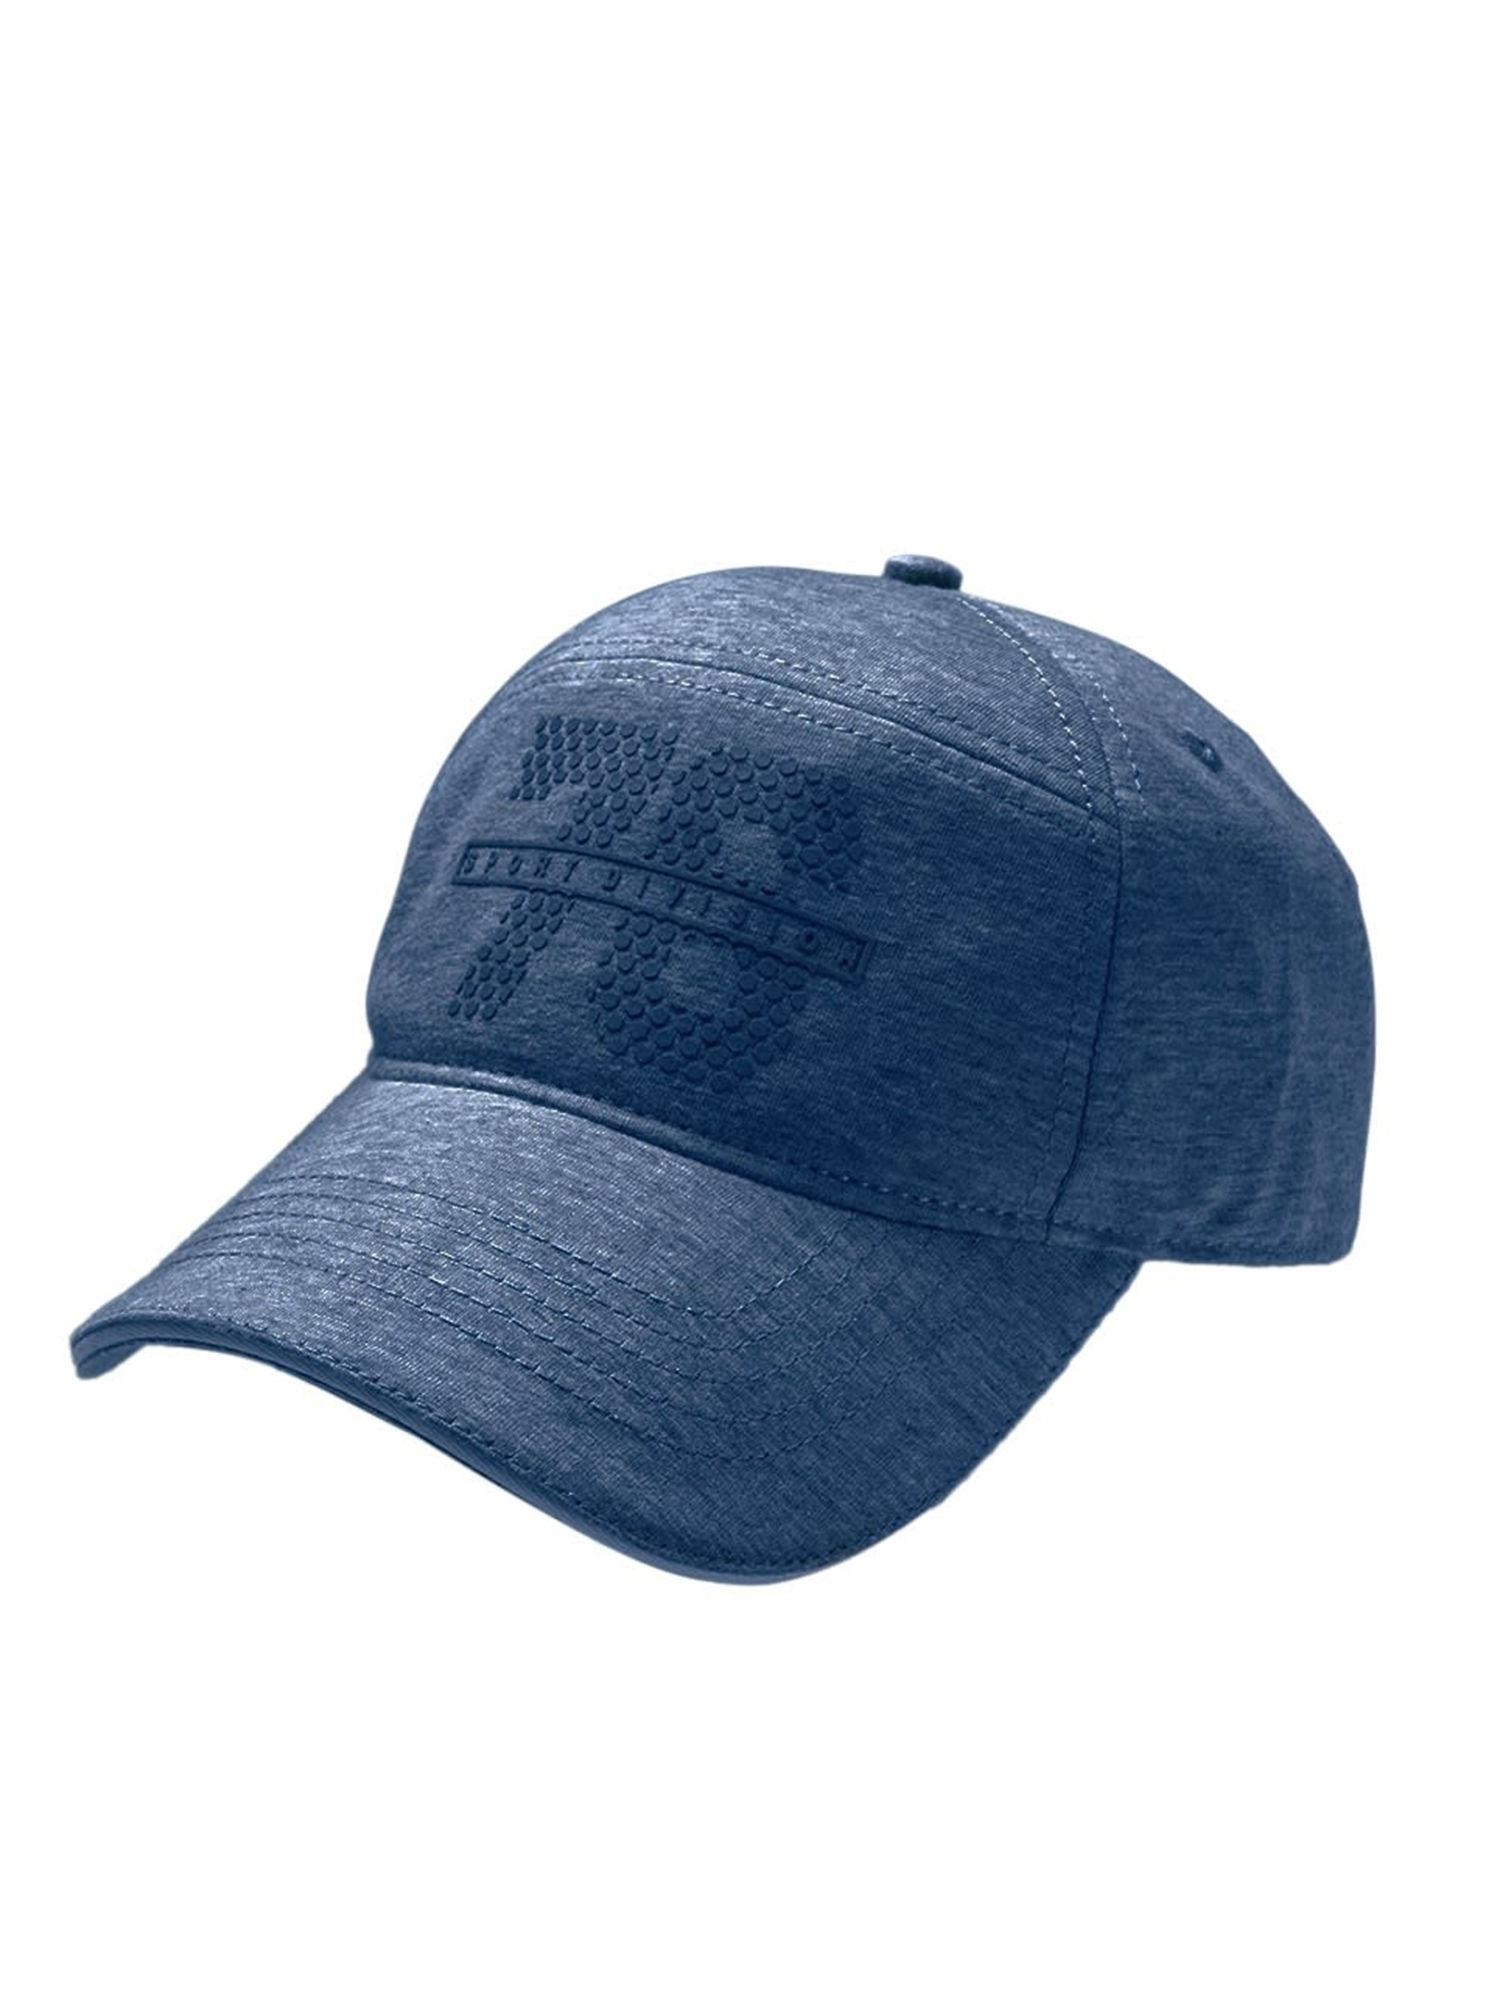 navy blue self design cap